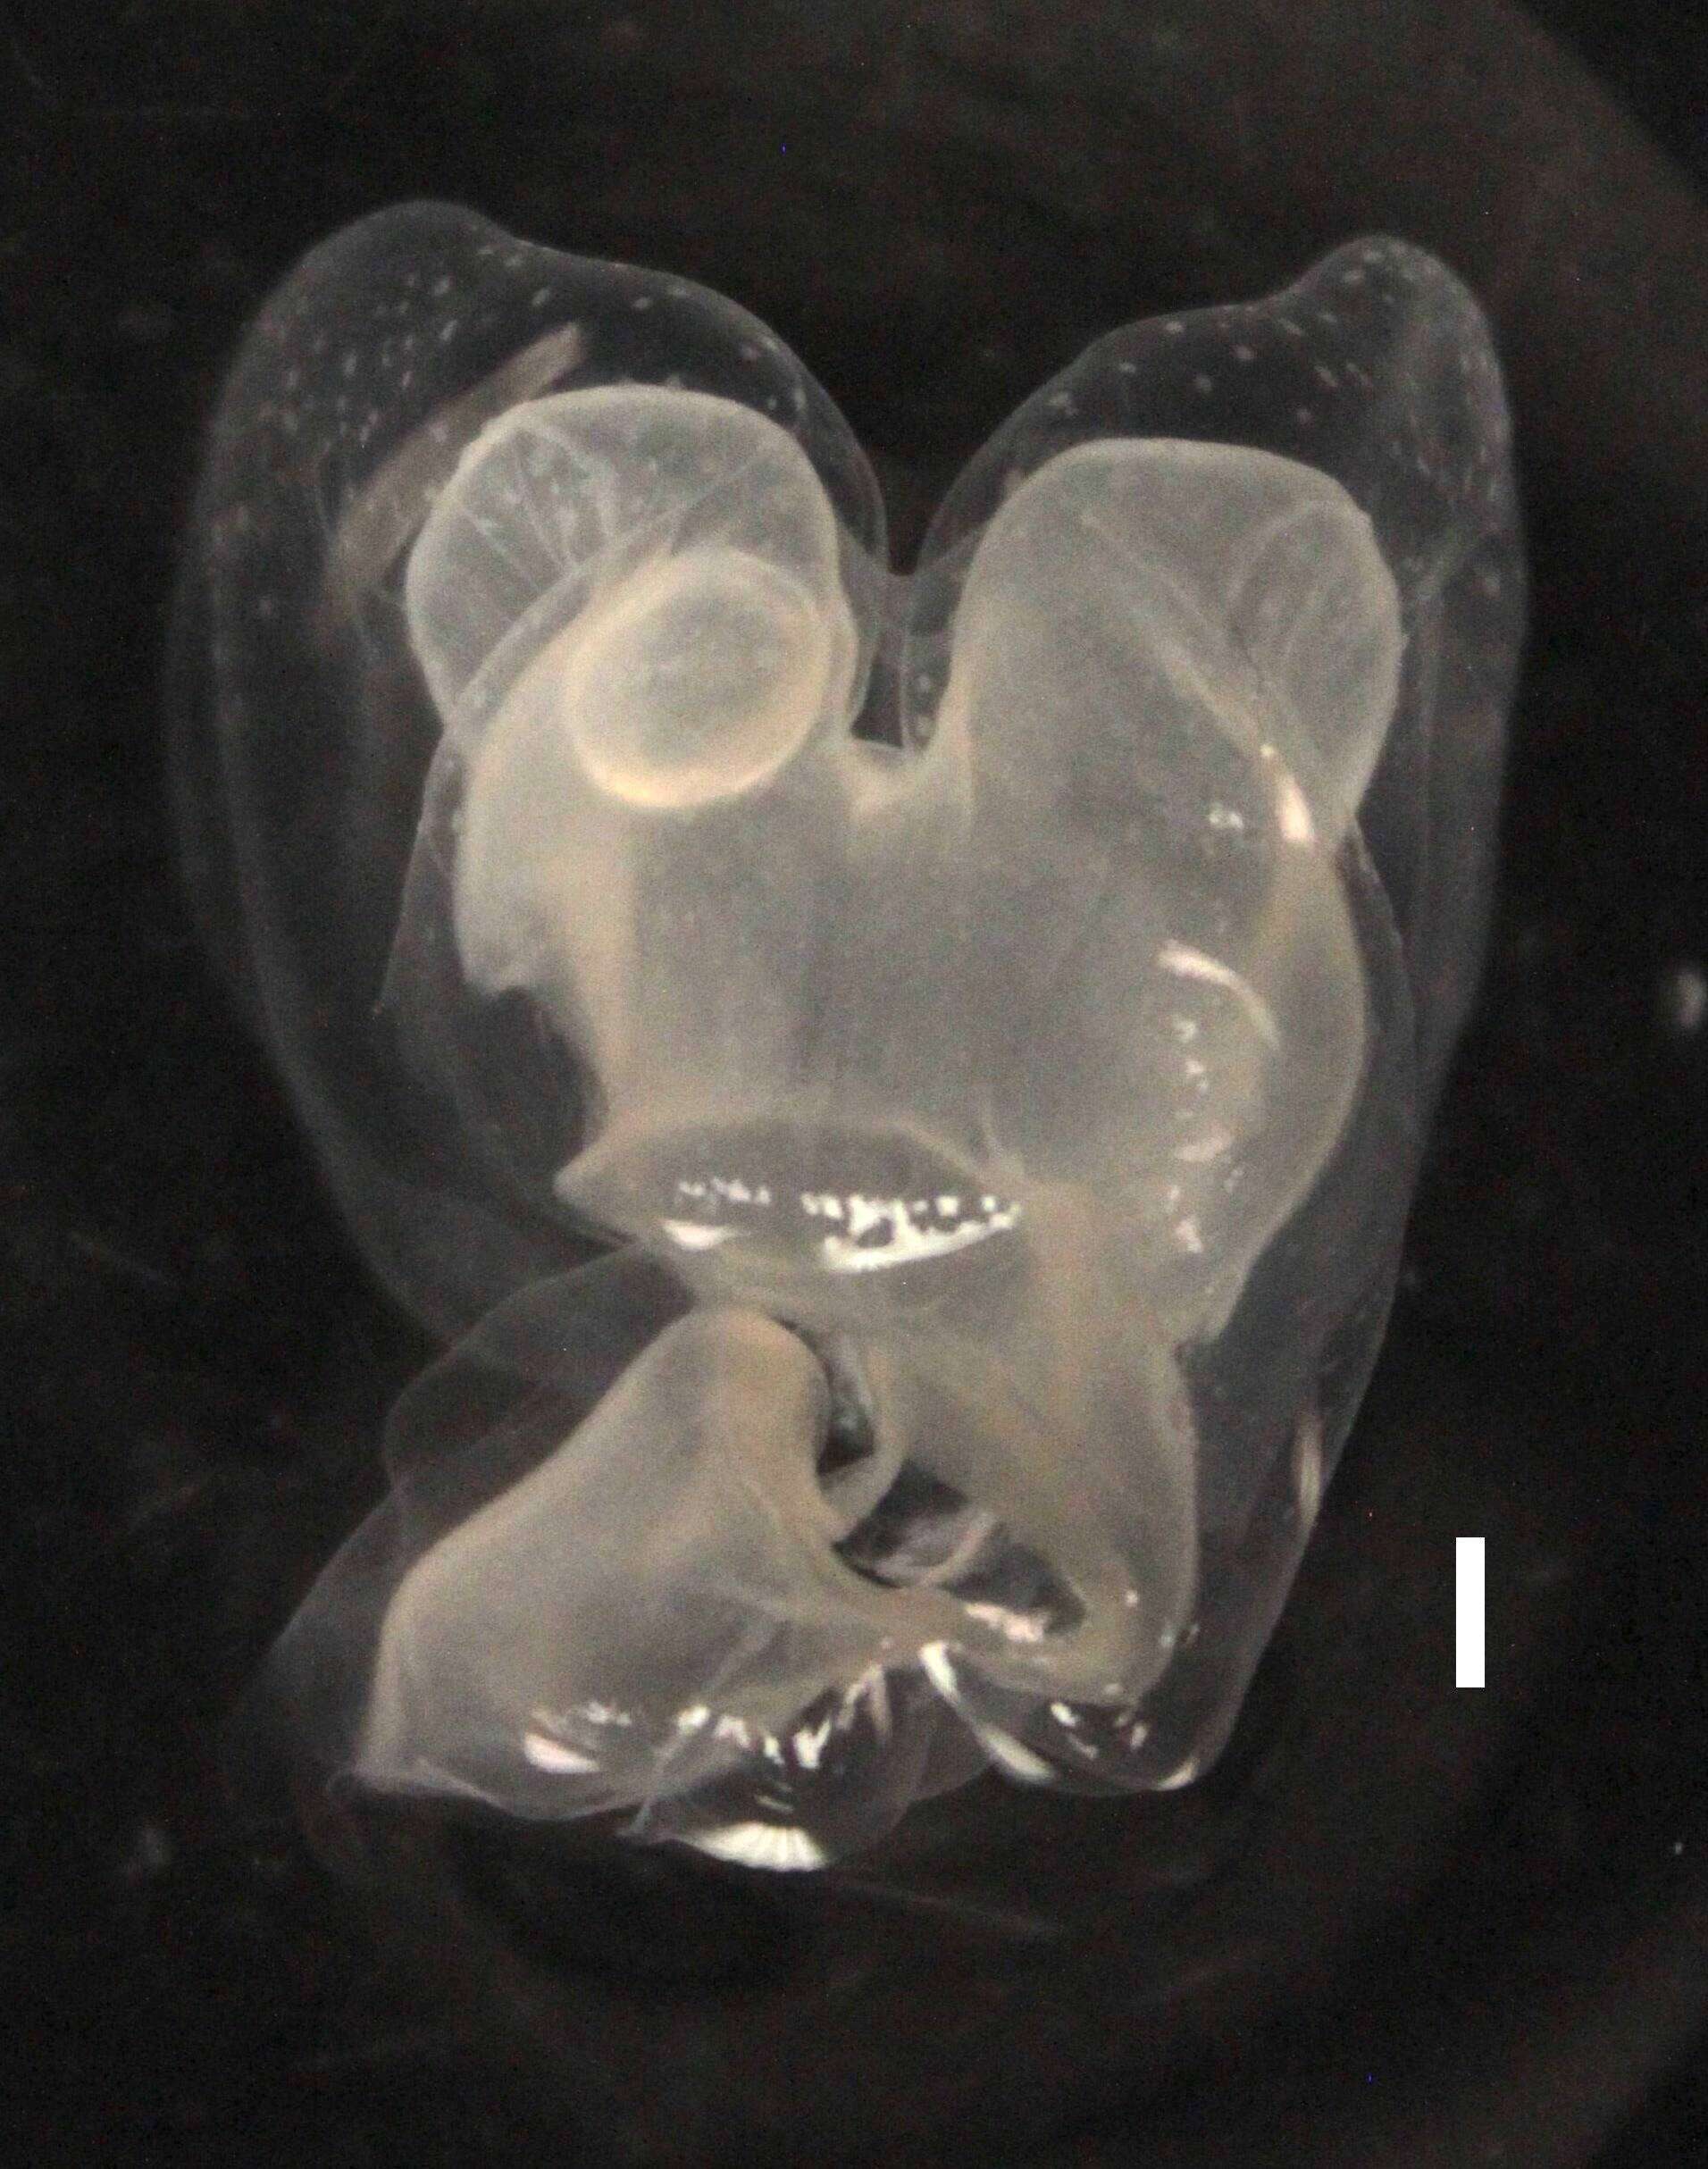 Image de Apolemia lanosa Siebert, Pugh, Haddock & Dunn 2013